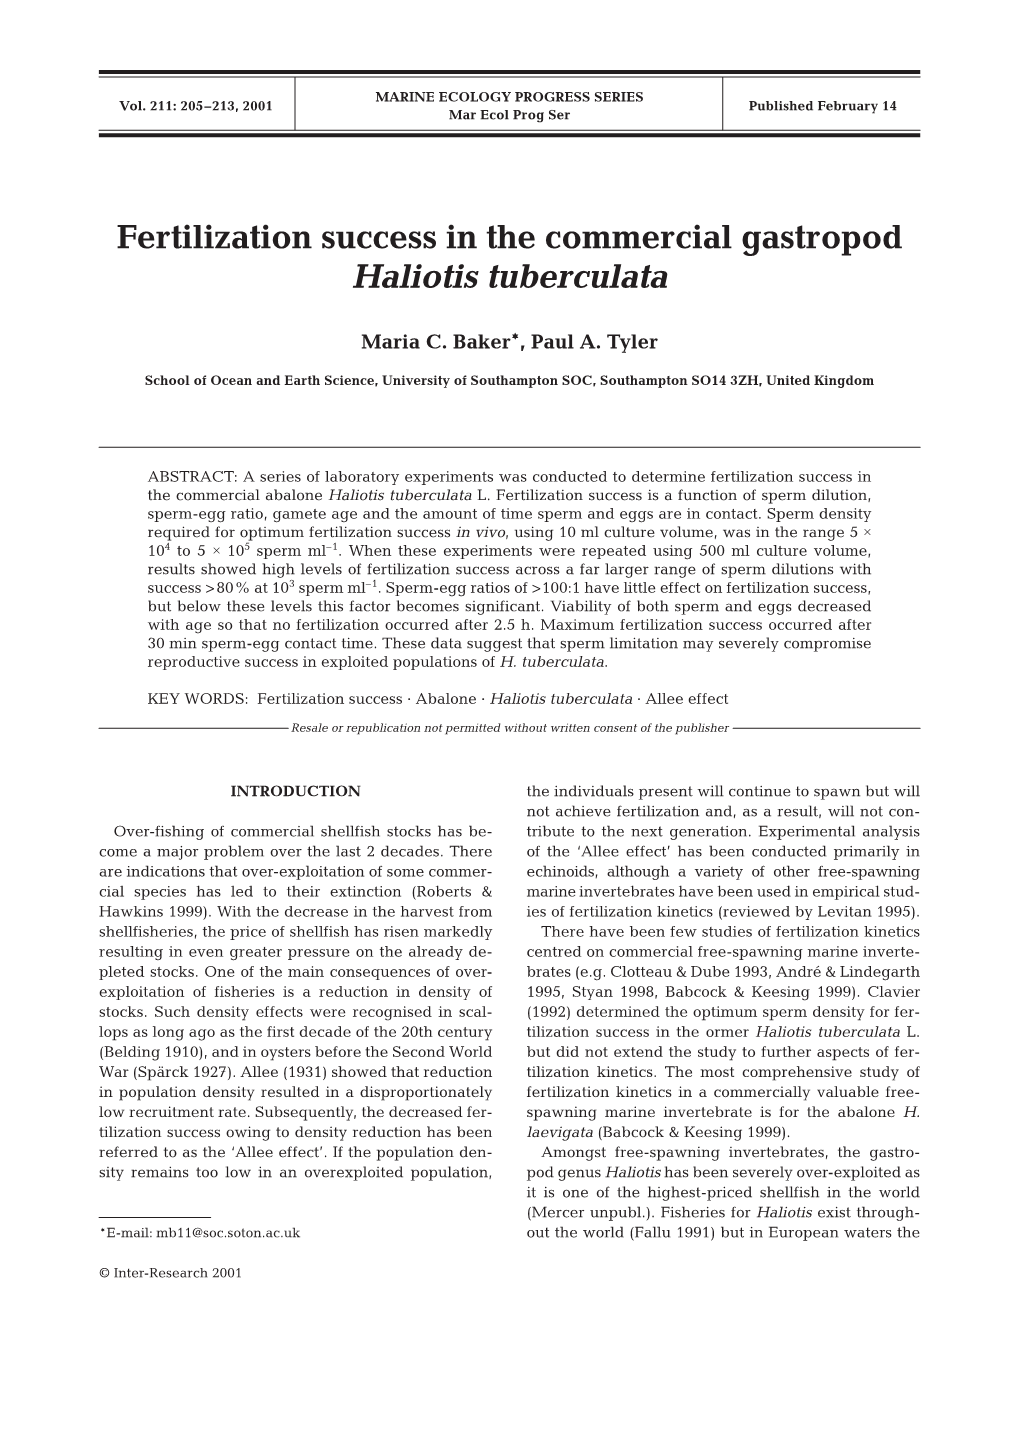 Fertilization Success in the Commercial Gastropod Haliotis Tuberculata